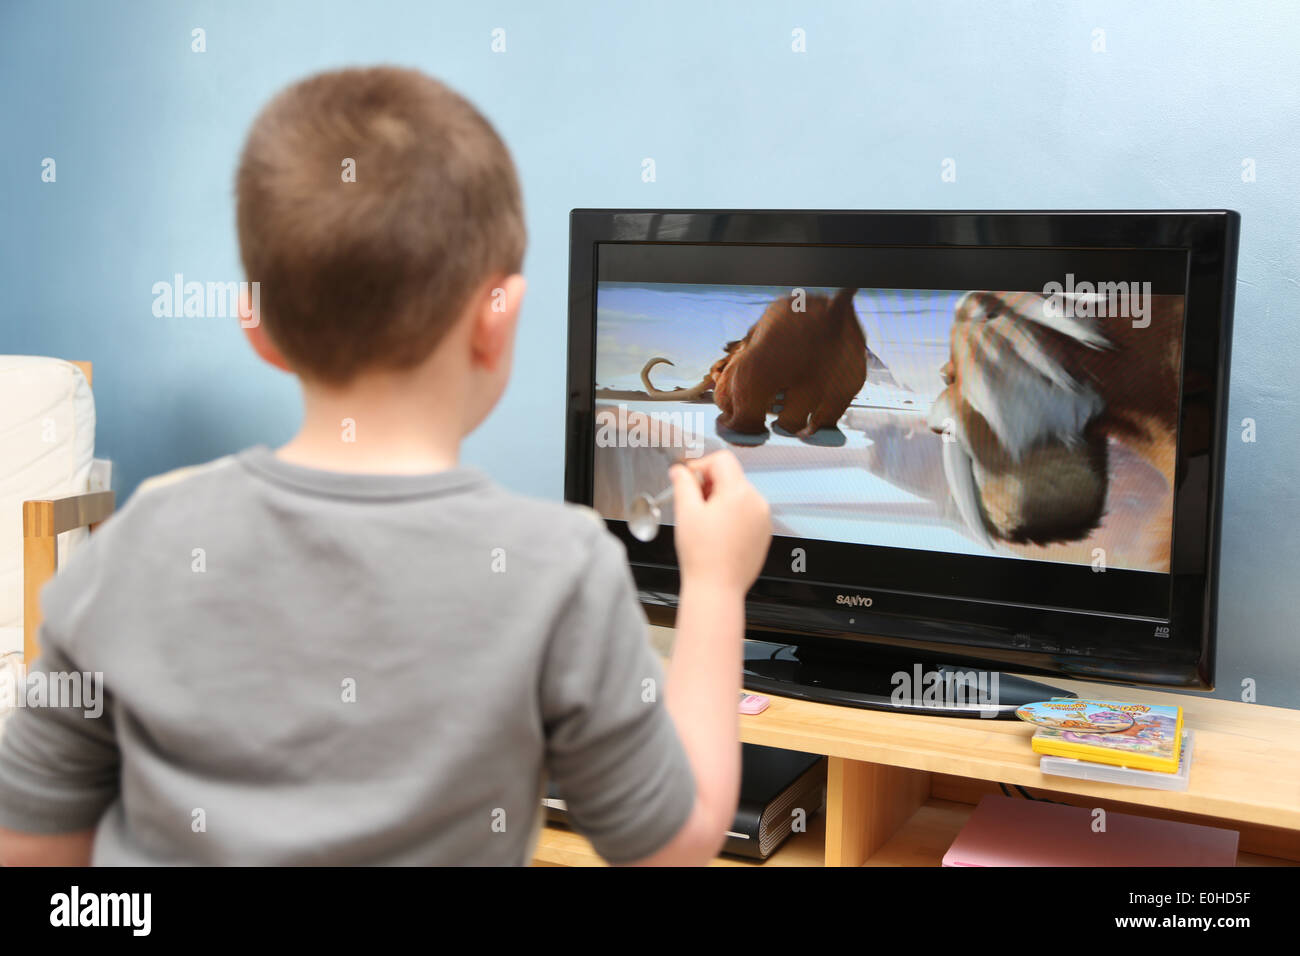 5 year old boy watching TV Stock Photo: 69225003 - Alamy